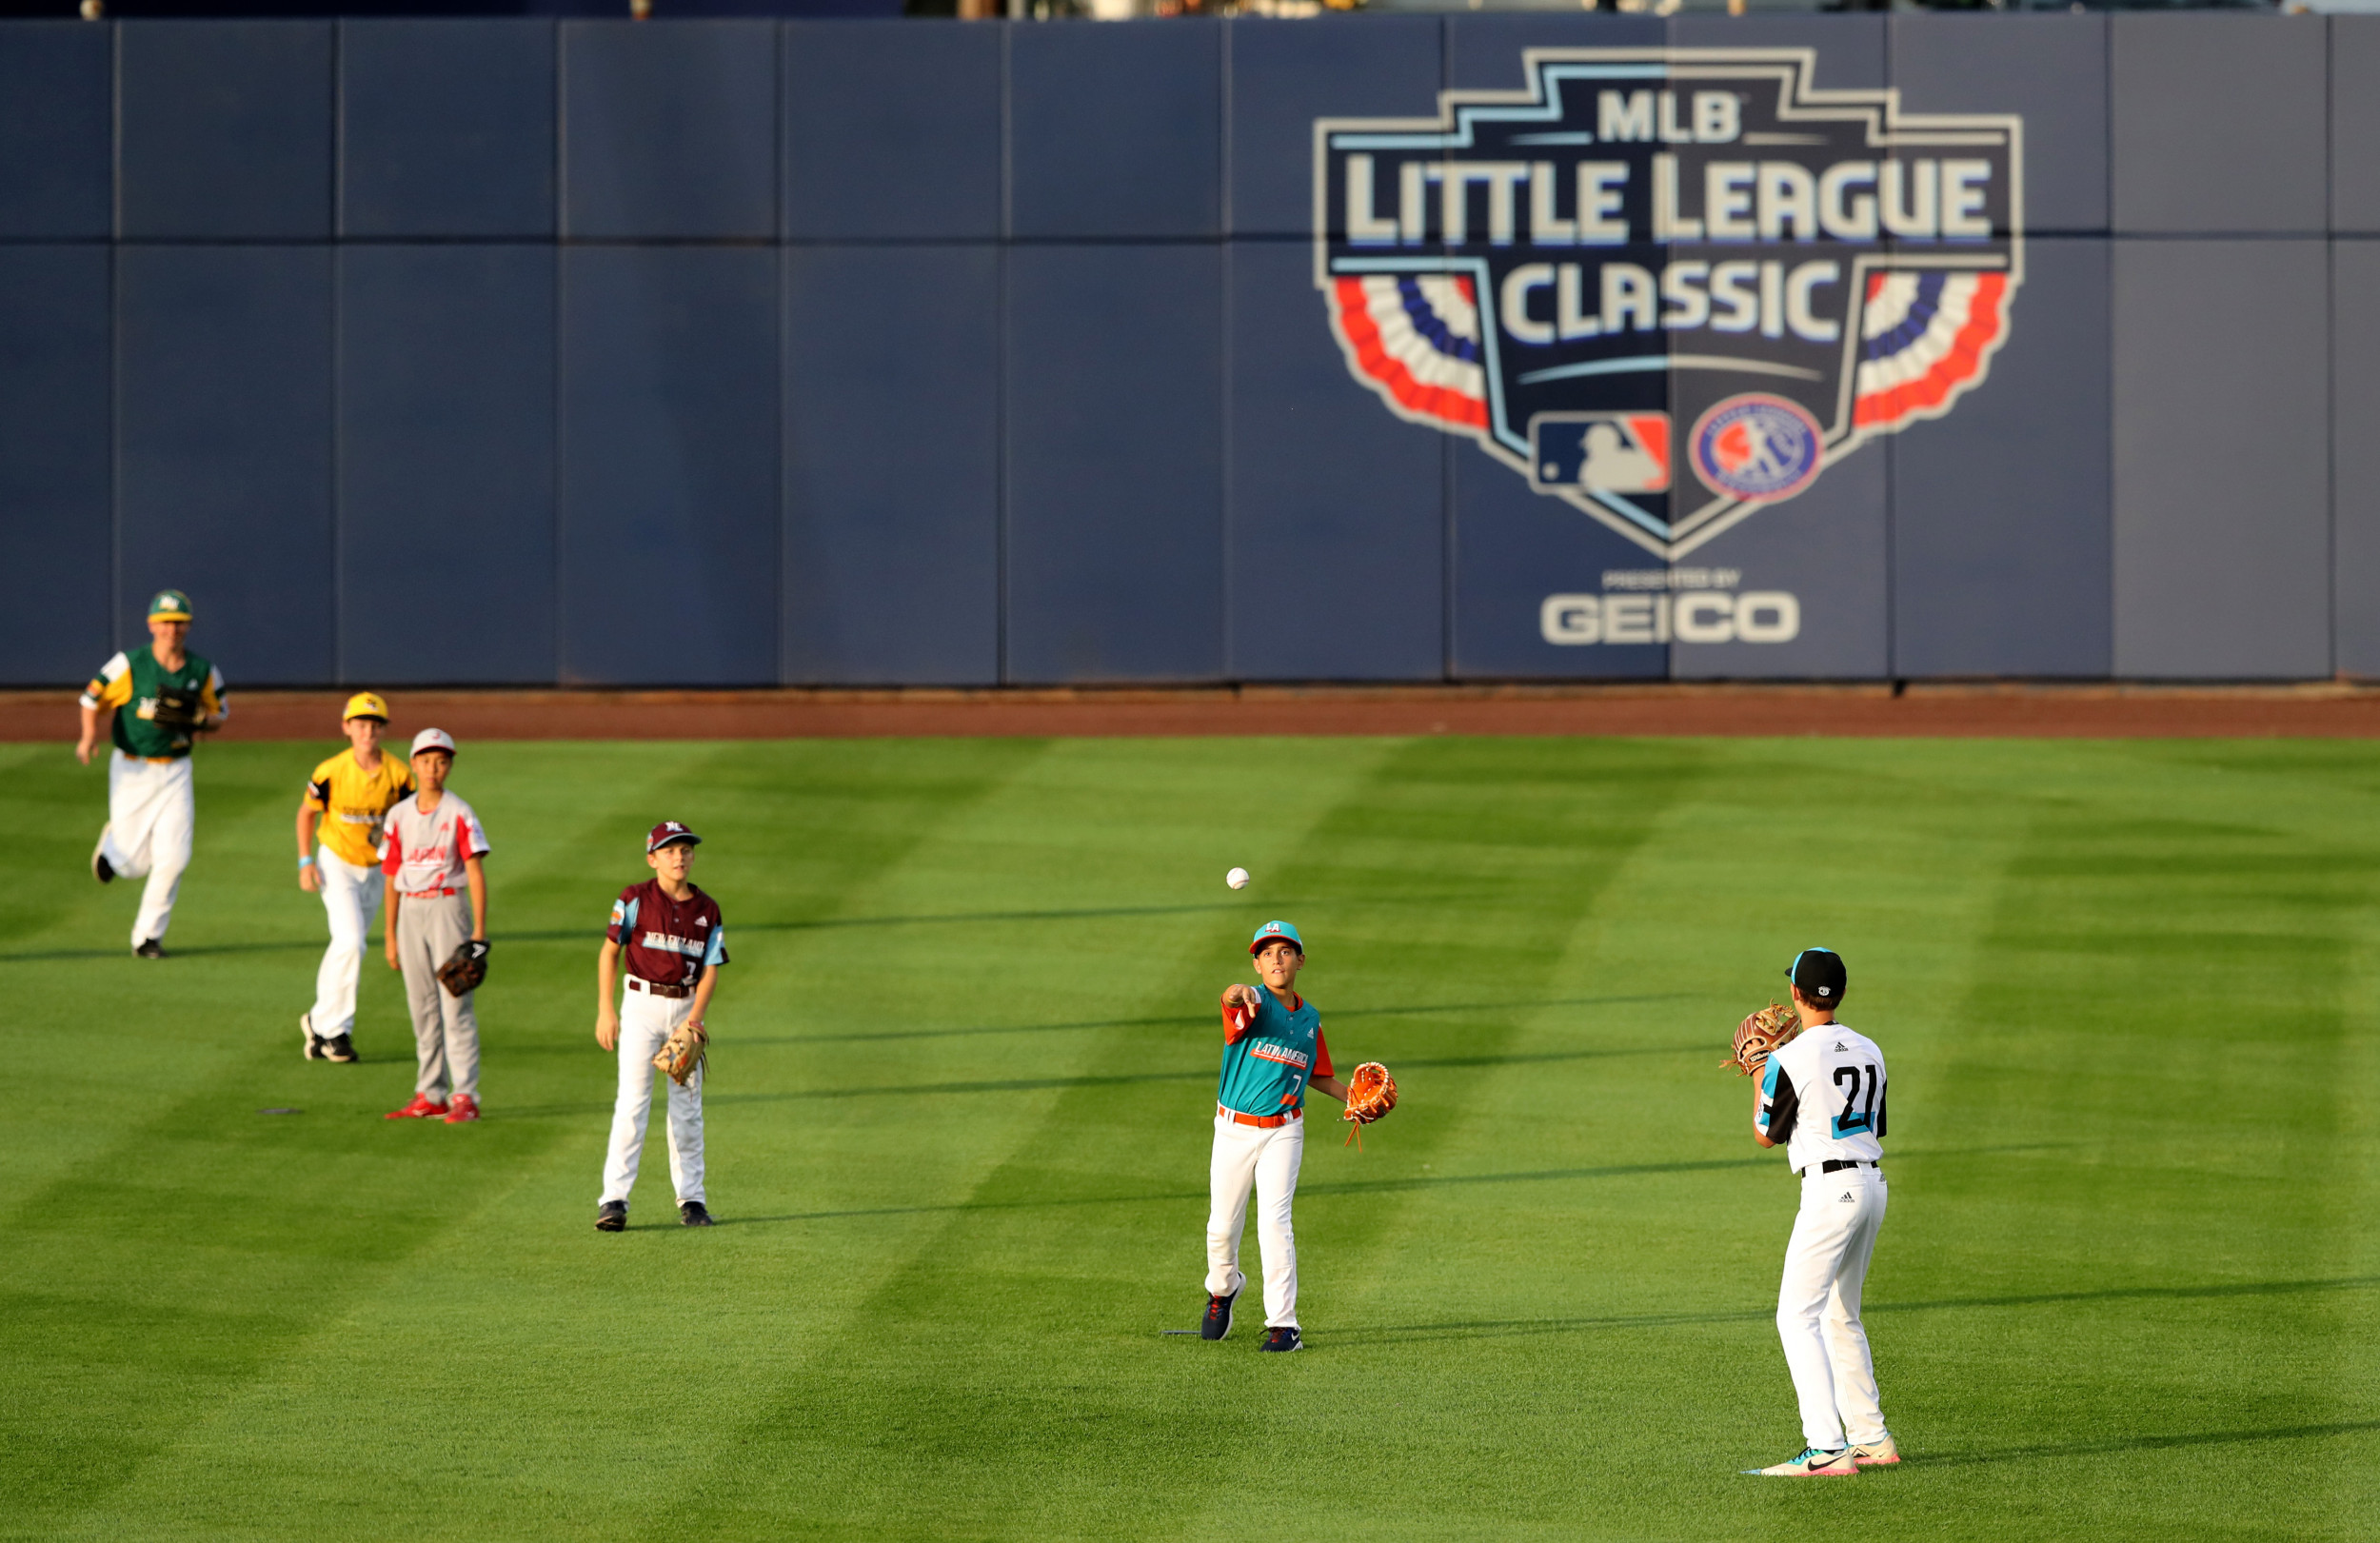 Little League World Series: How to watch, bracket, new format